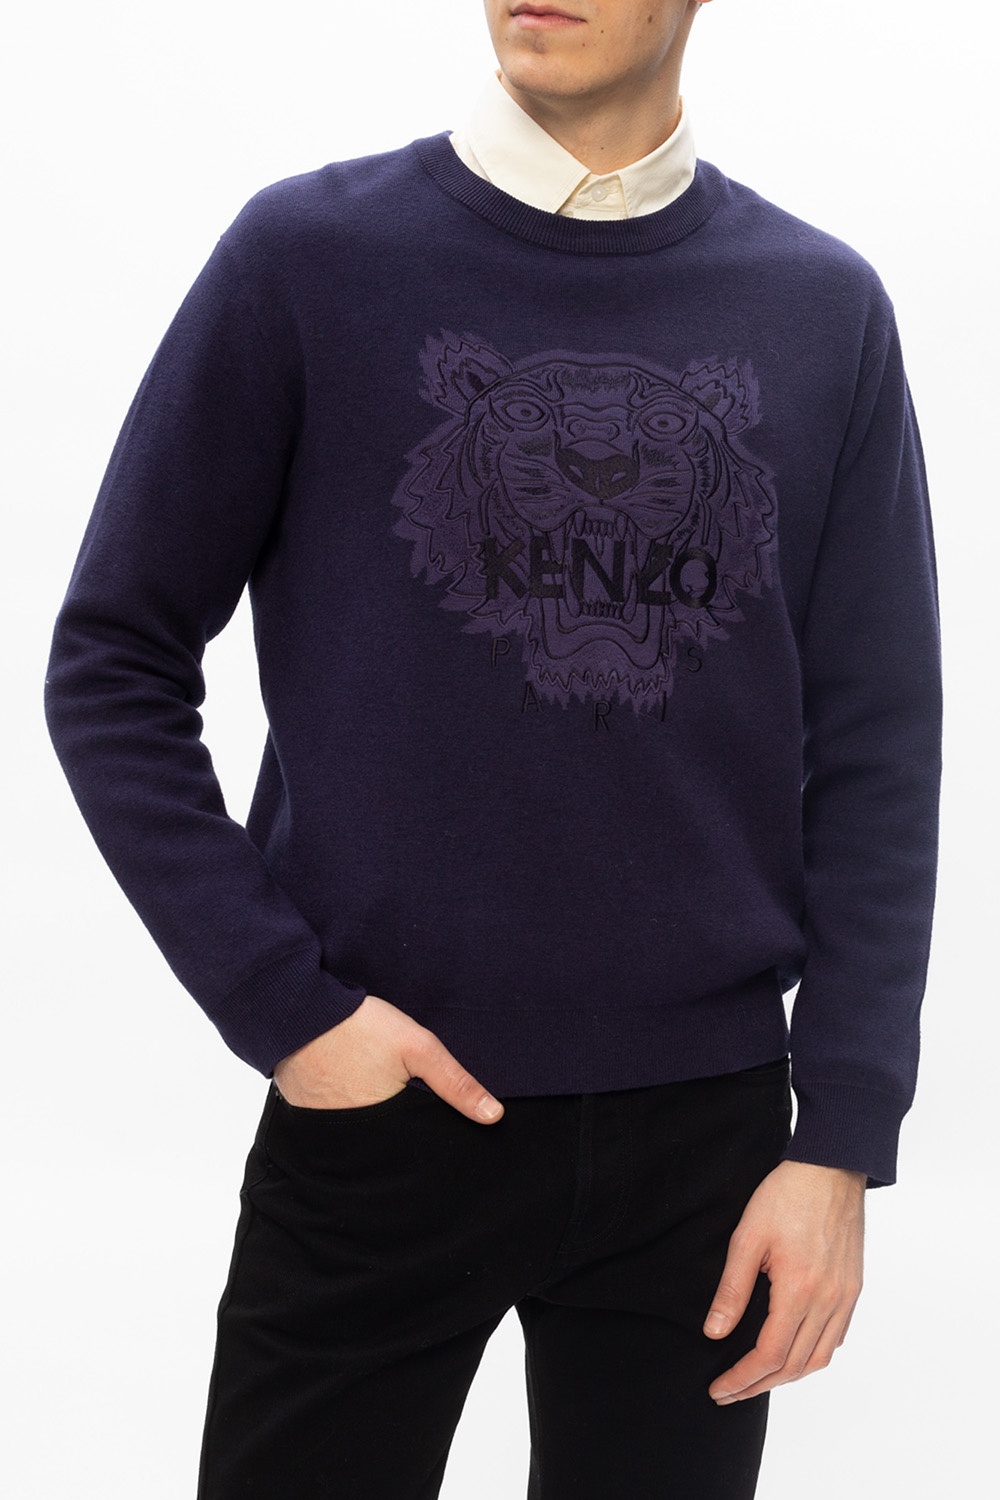 Kenzo Carhartt Shirt In Petroleum Cotton